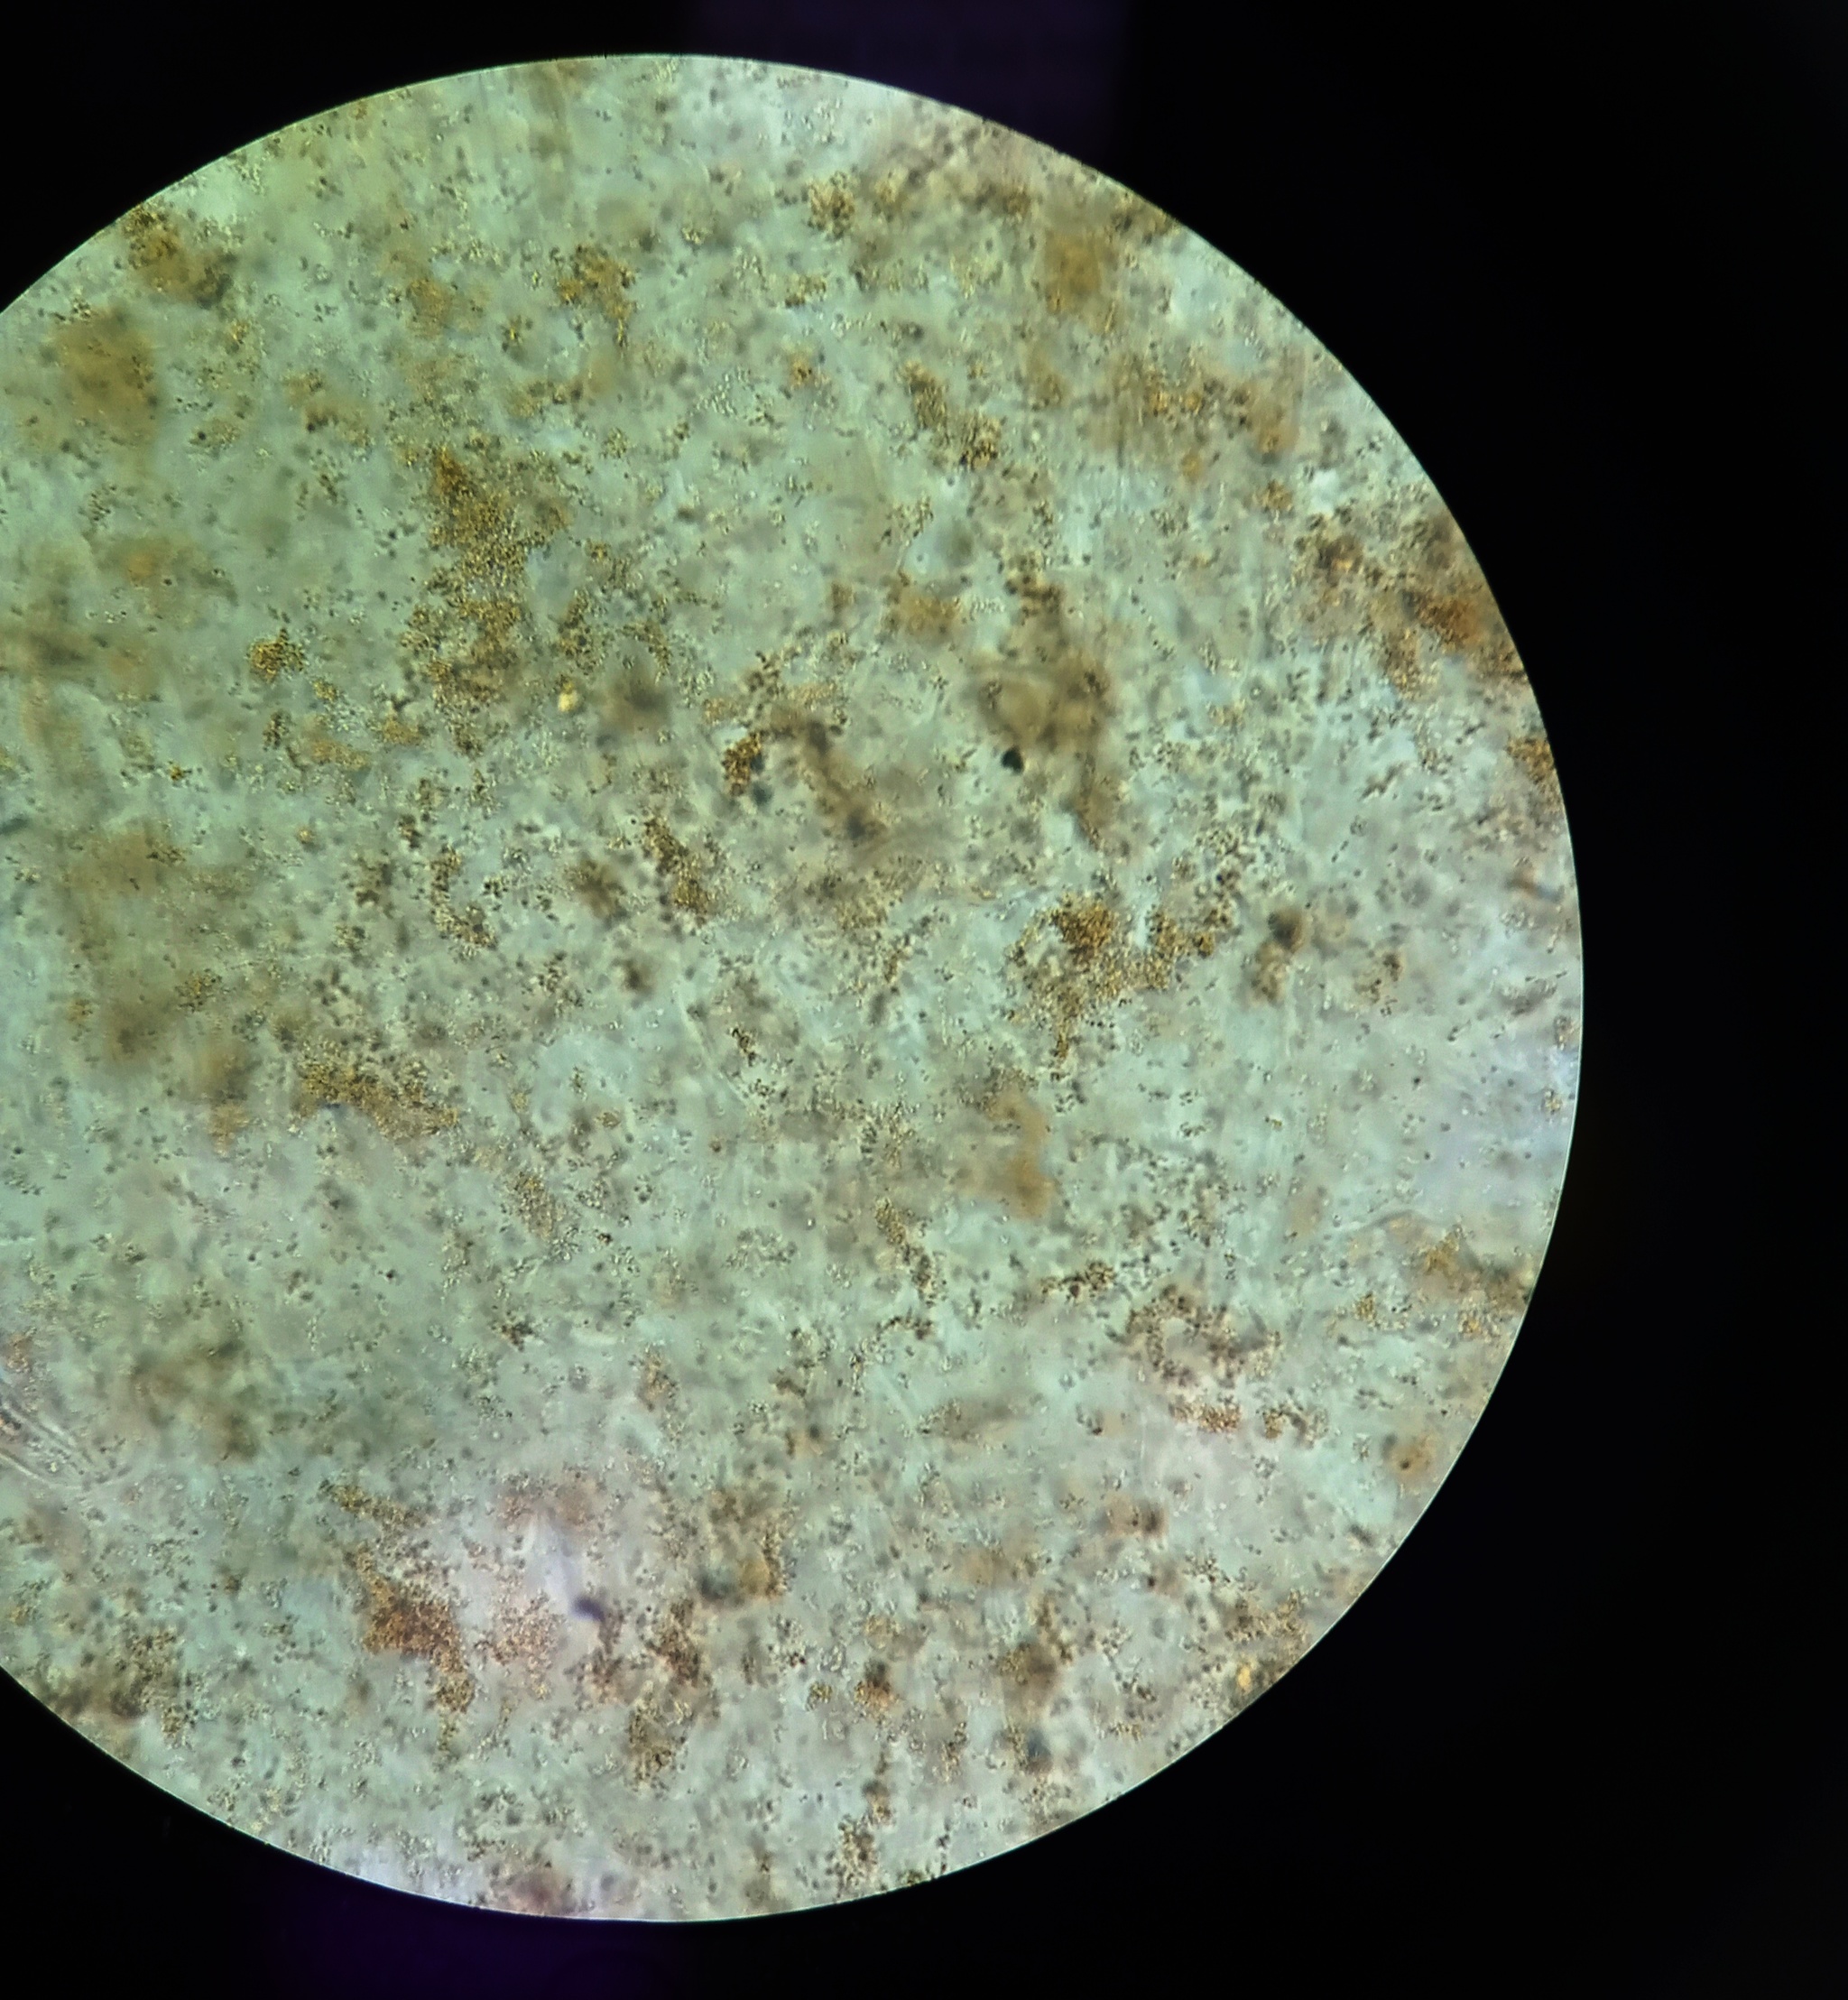 Amorphous urates in urine sediment - My, Kld, Laboratory, Microscope, Microscopy, Analysis, Urine, The medicine